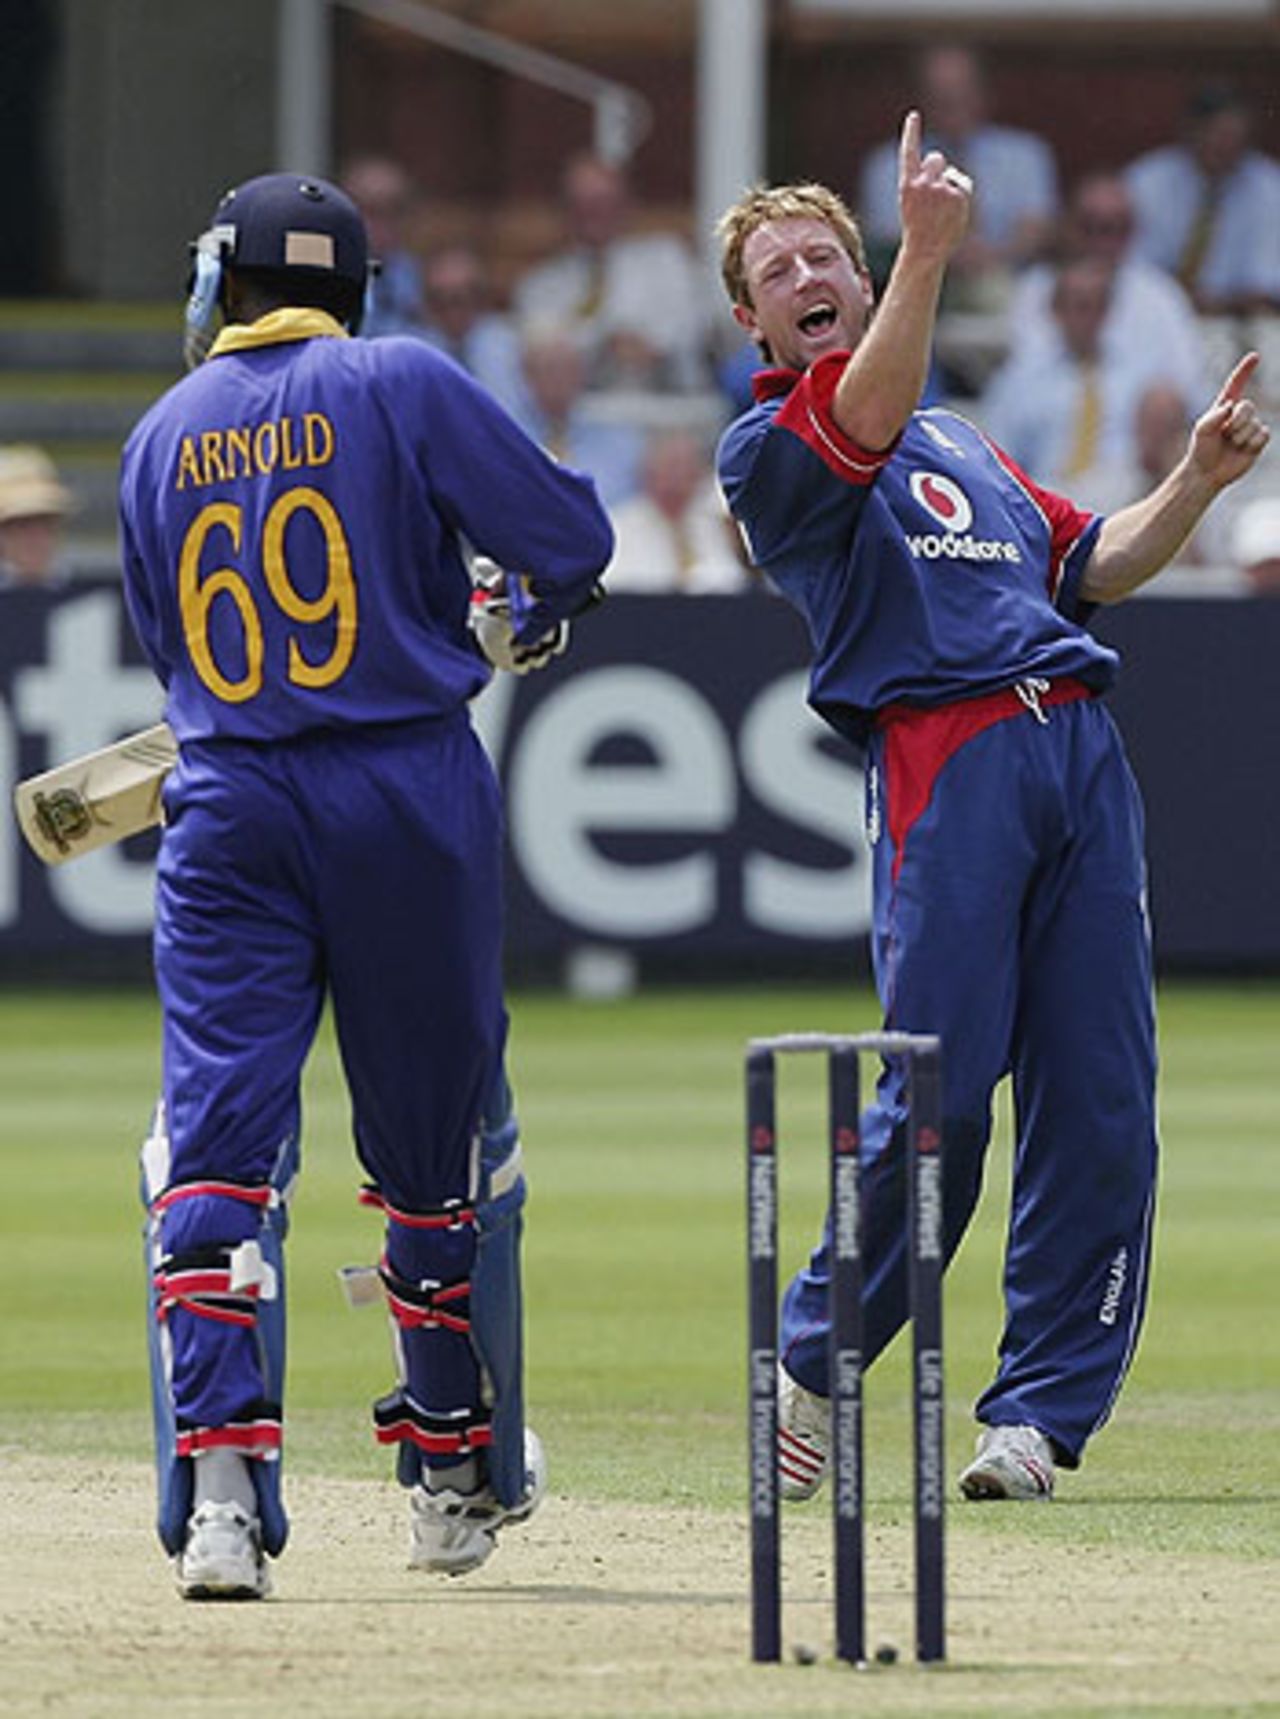 Paul Collingwood dismisses Russel Arnold, England v Sri Lanka, 1st ODI, Lord's, June 17, 2006